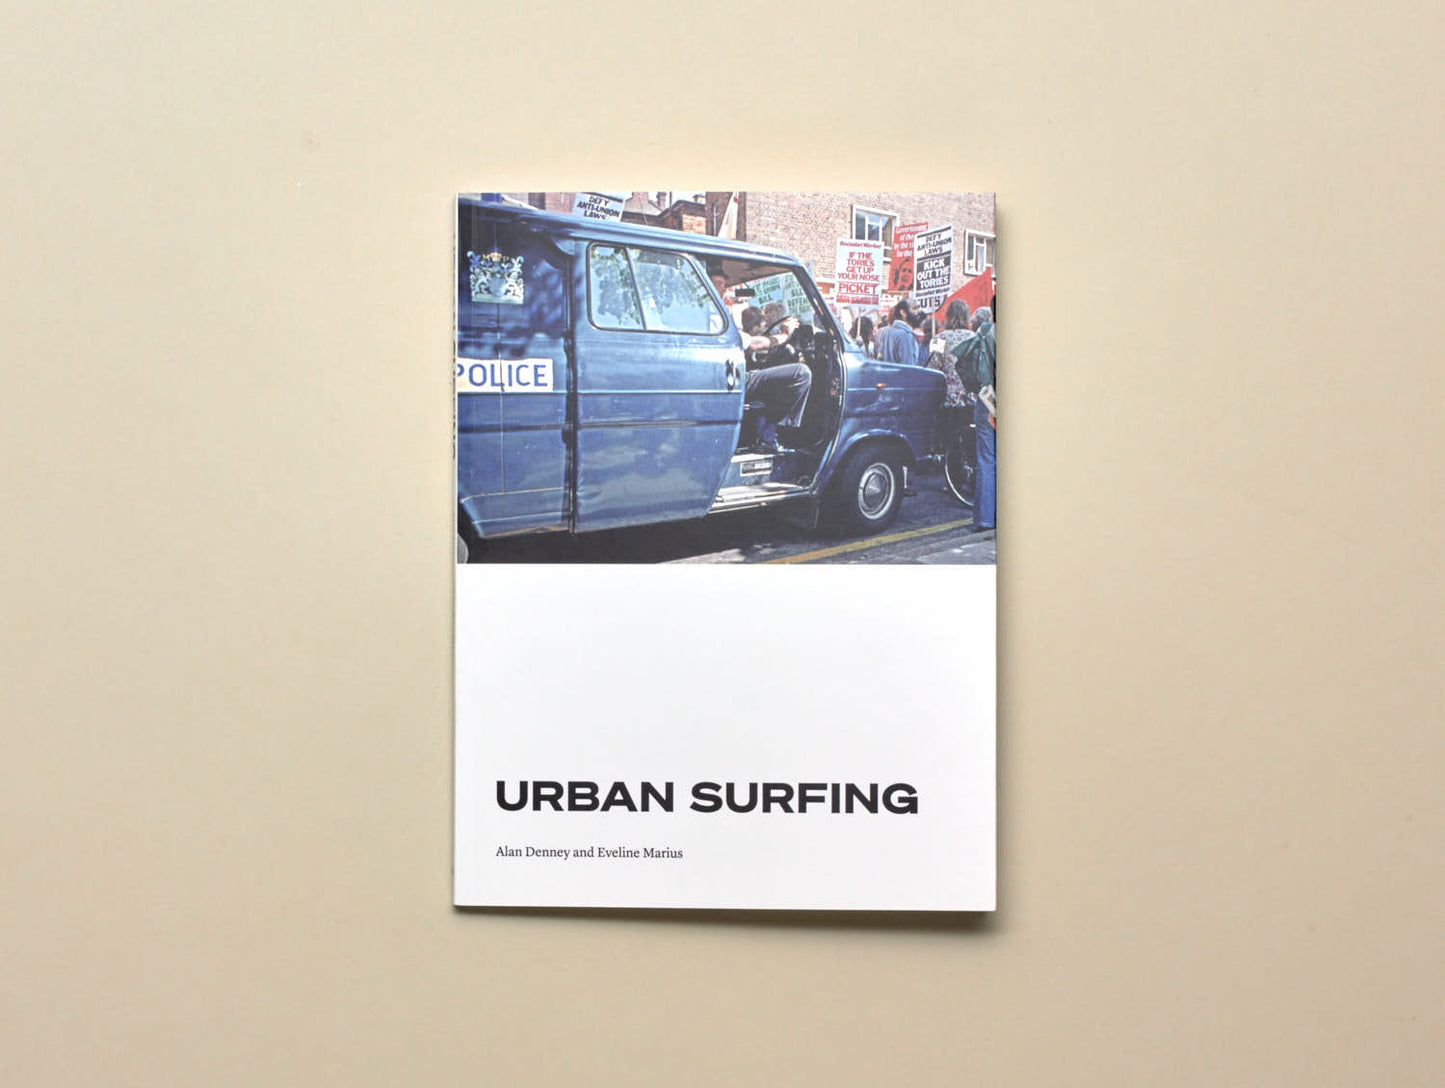 Alan Denney and Eveline Marius, Urban Surfing